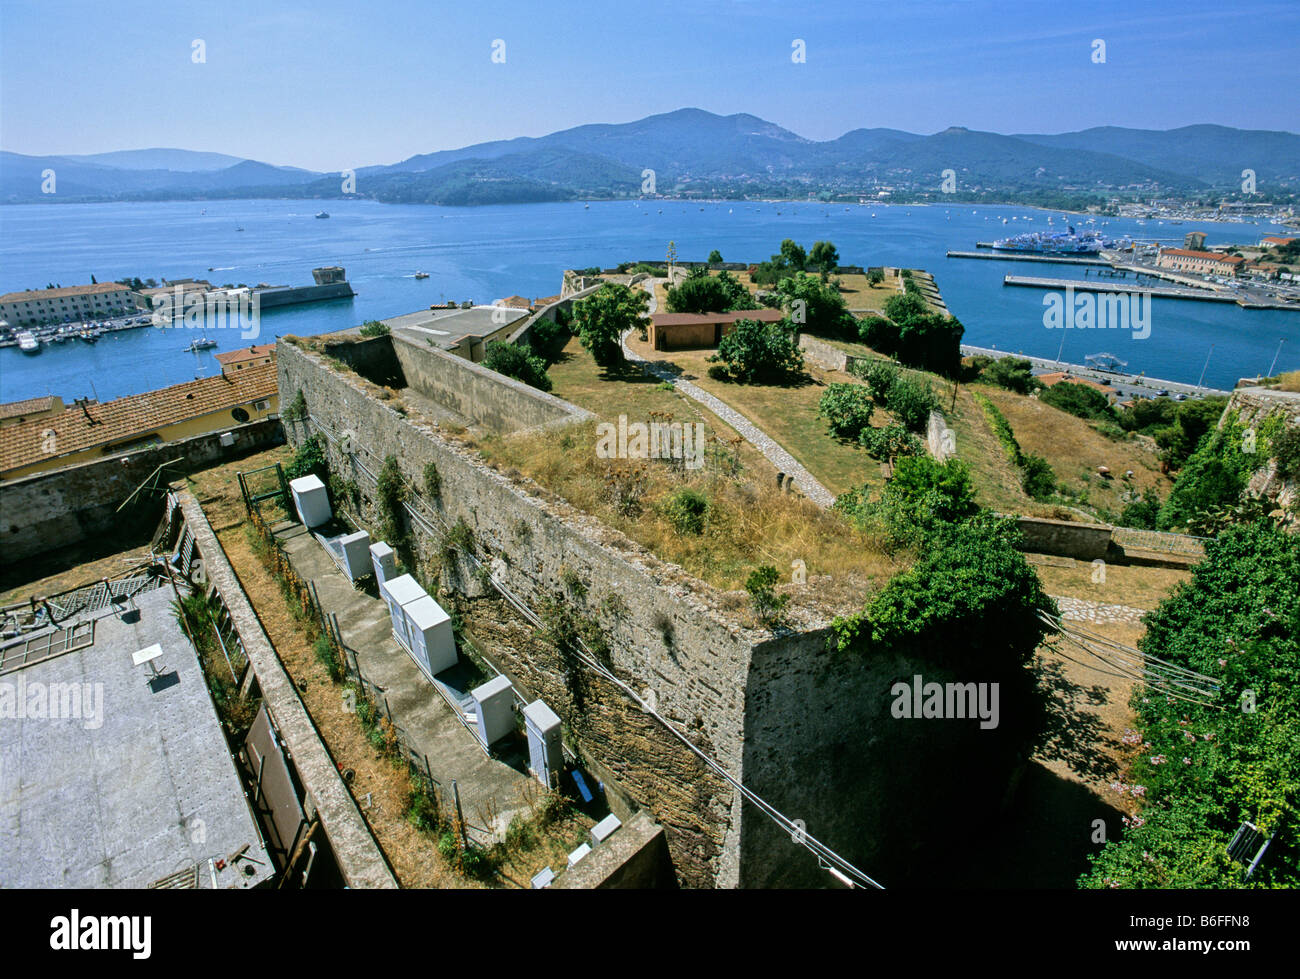 Bastione Veneziano, Forte Falcone, Fortezze Medicee, Portoferraio, Island of Elba, province of Livorno, Tuscany, Italy, Europe Stock Photo